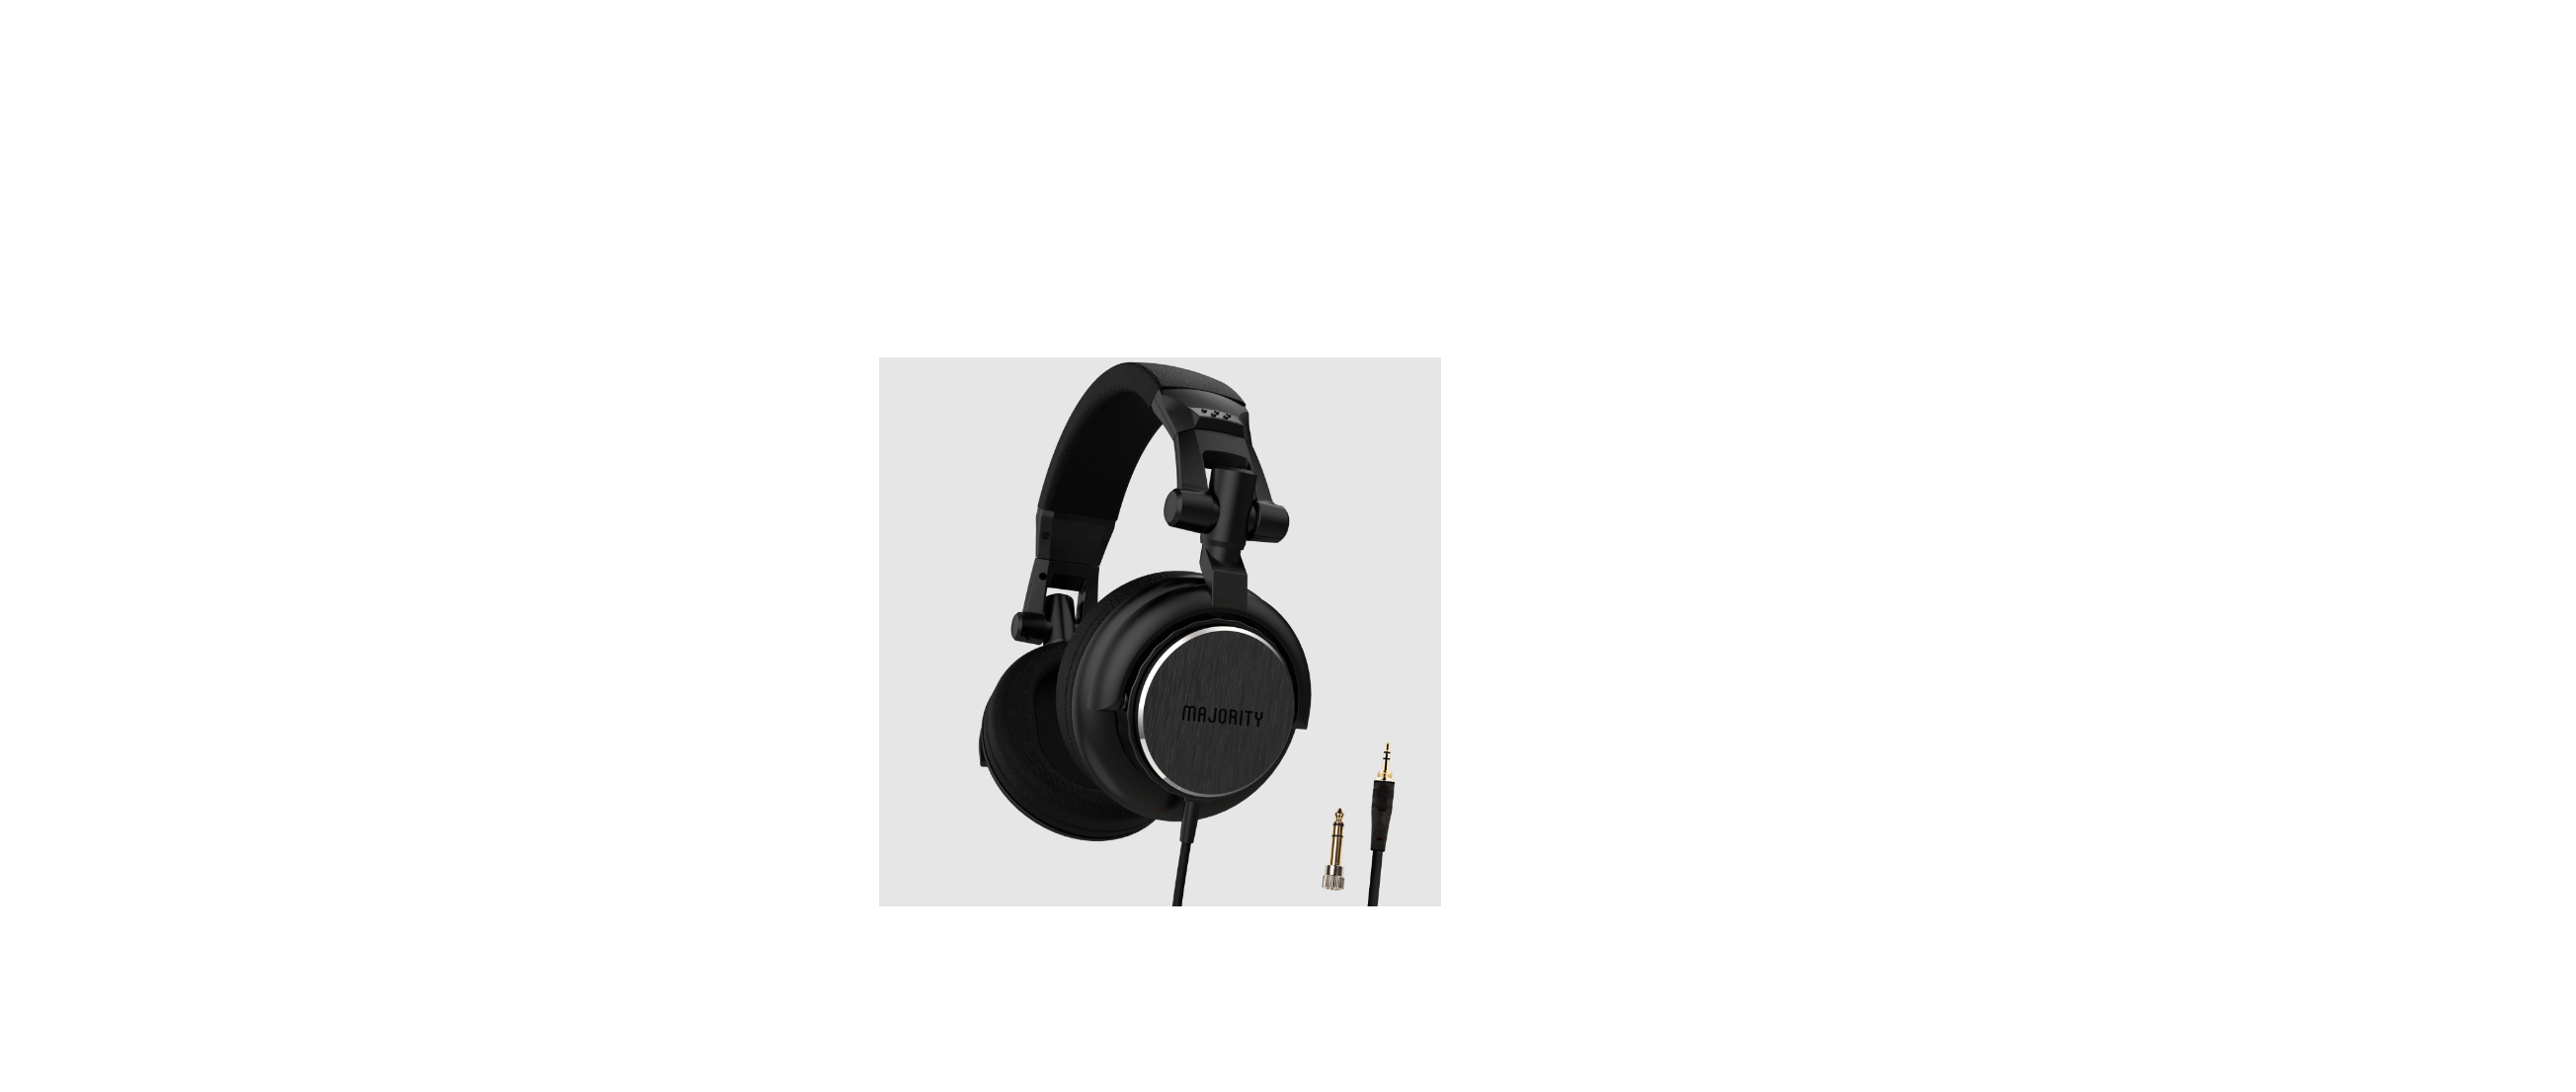 Majority-Tru-Studio-Headphone-User-Manual-prduct-img